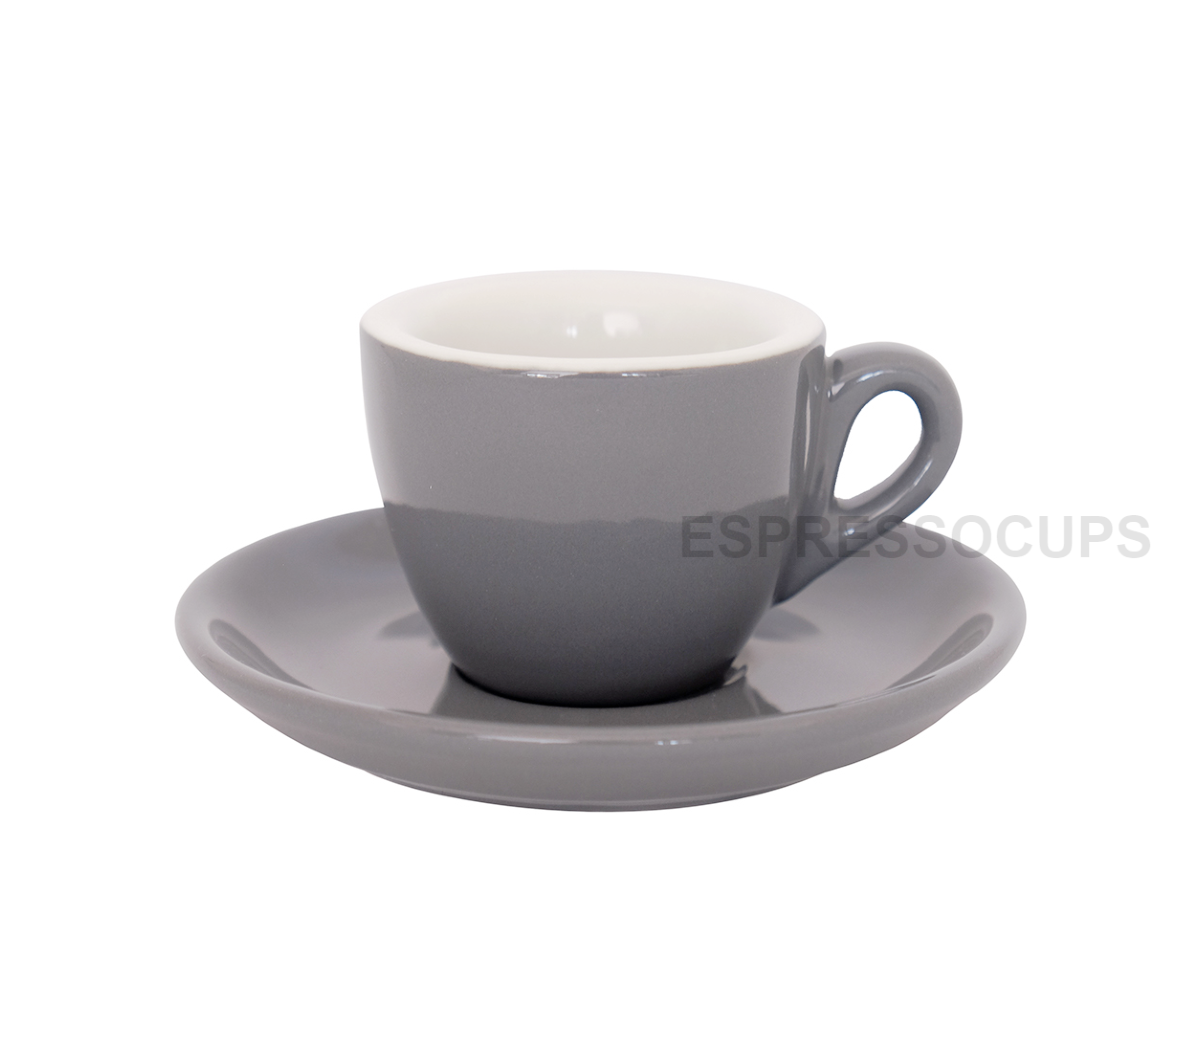 "ROSA" Espresso Cups 70ml - grey